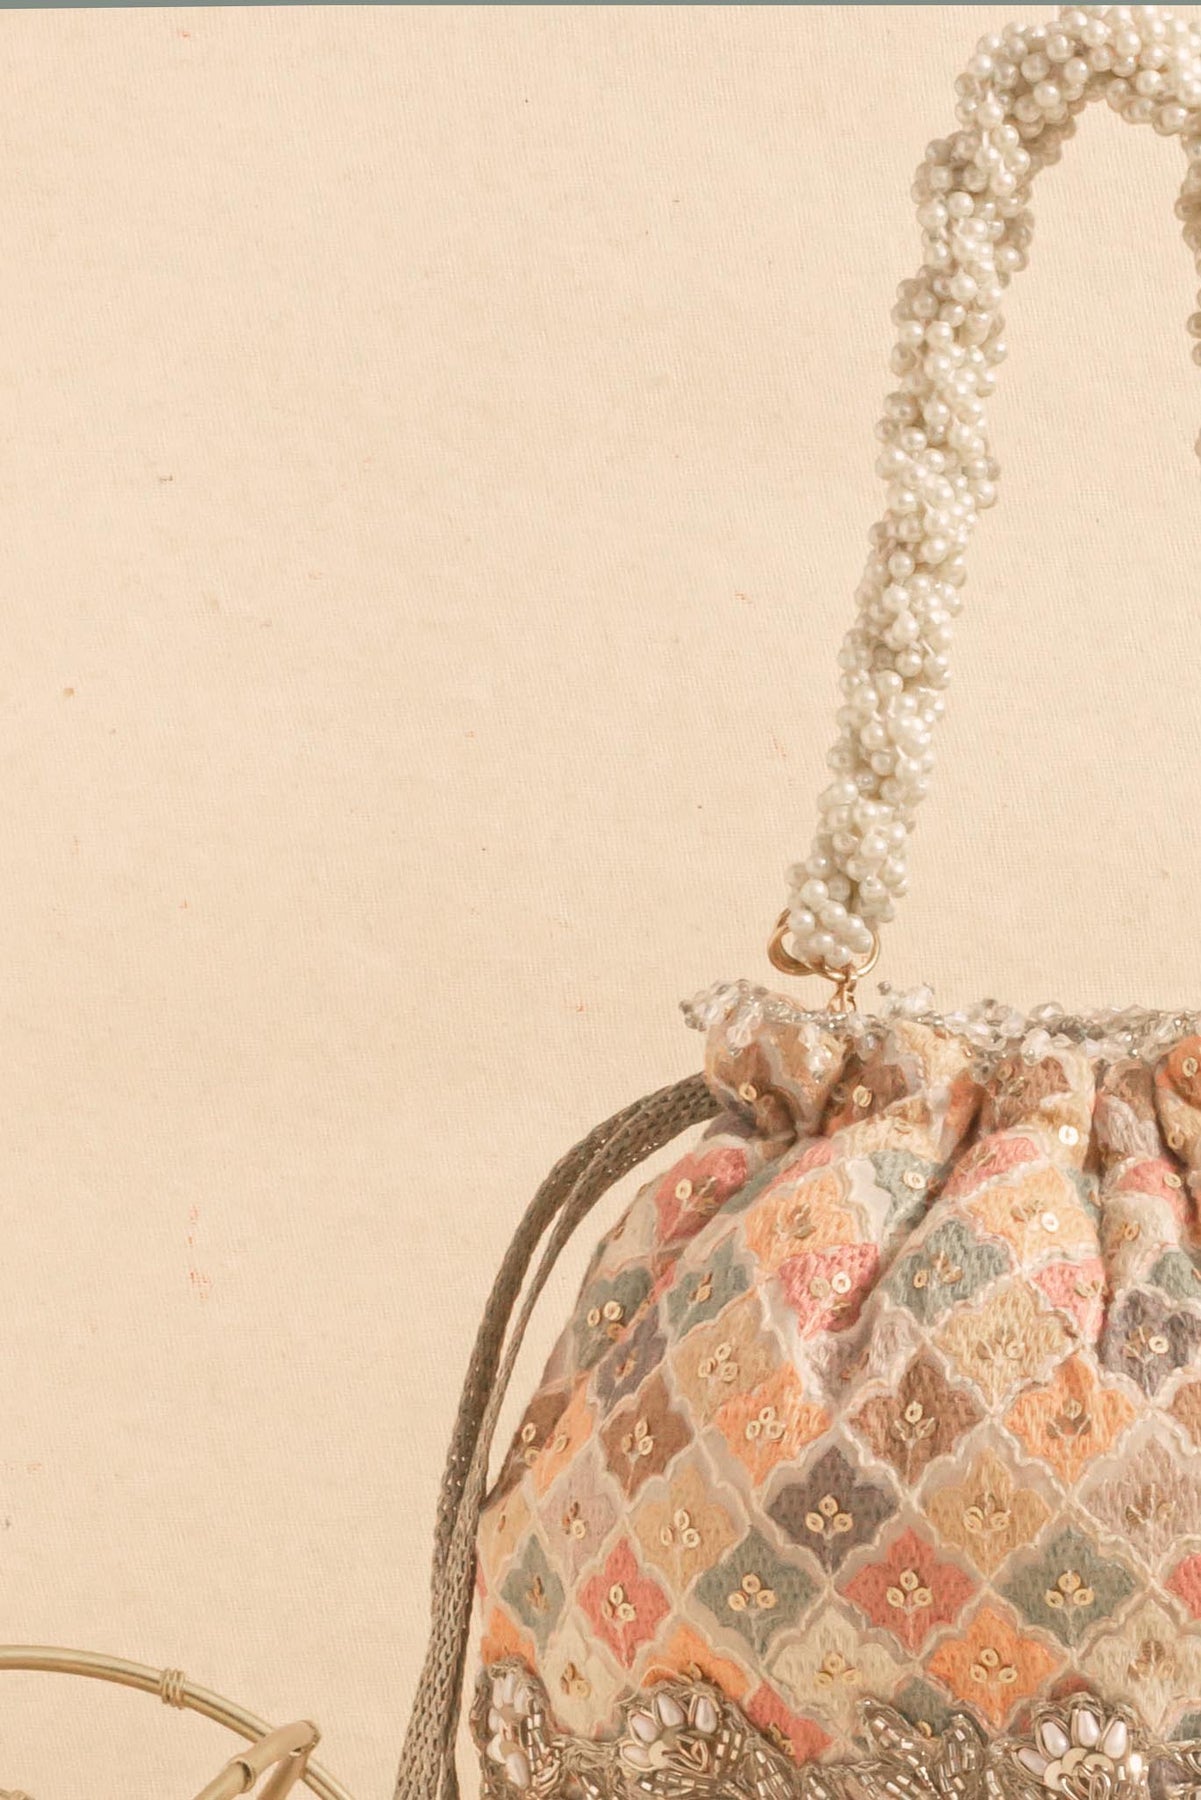 Embellished Potli Bag | Potli bags, Bridal bag, Hand beading